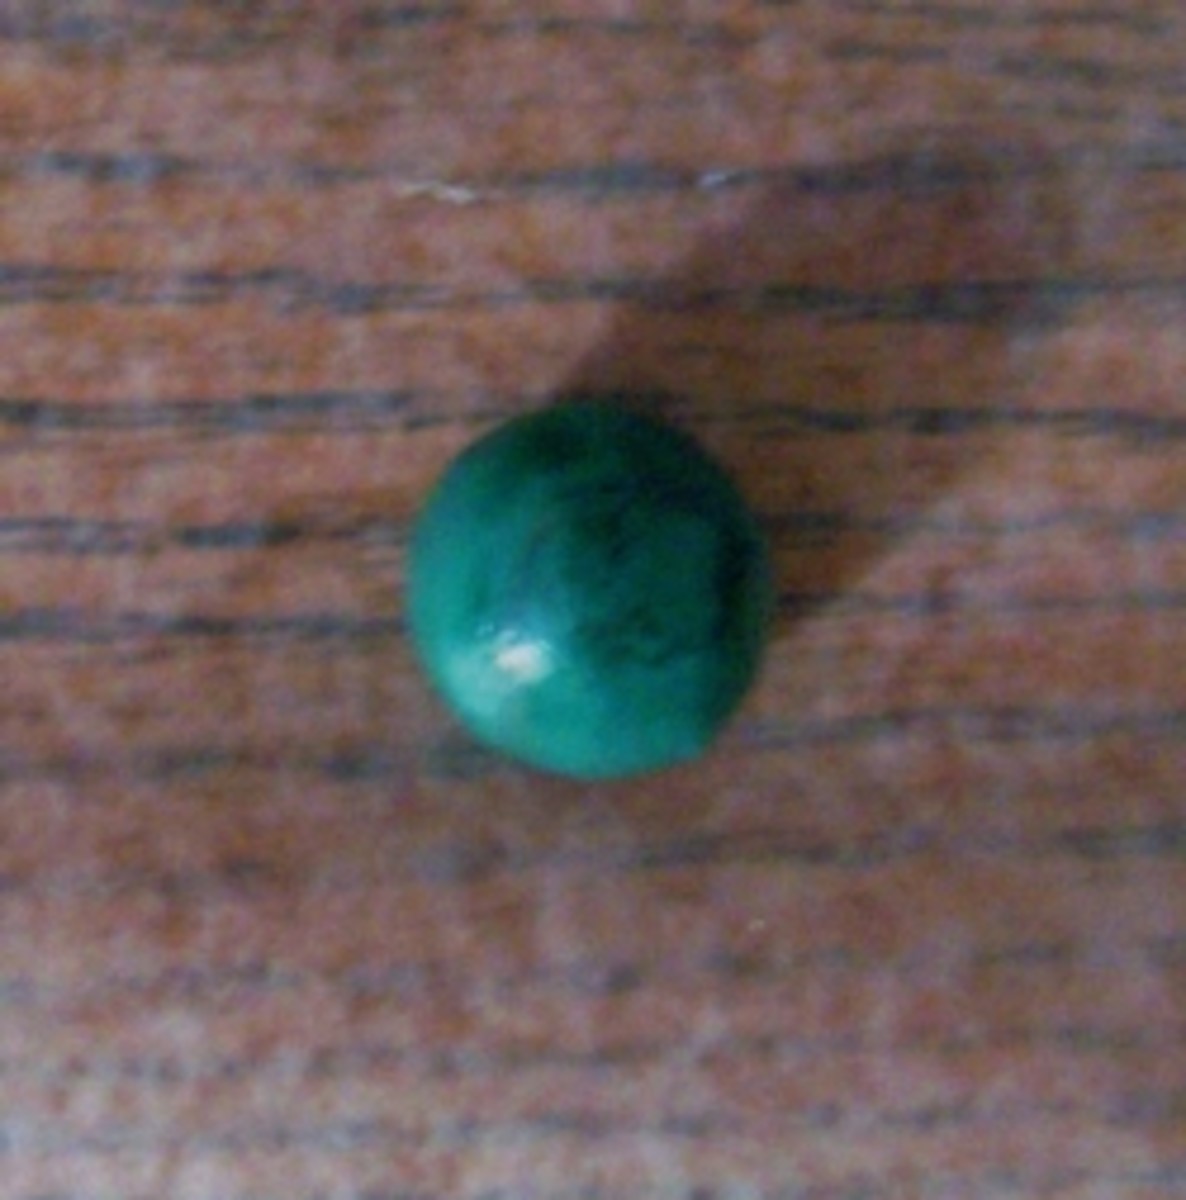 Step 3. Make a small round green ball.